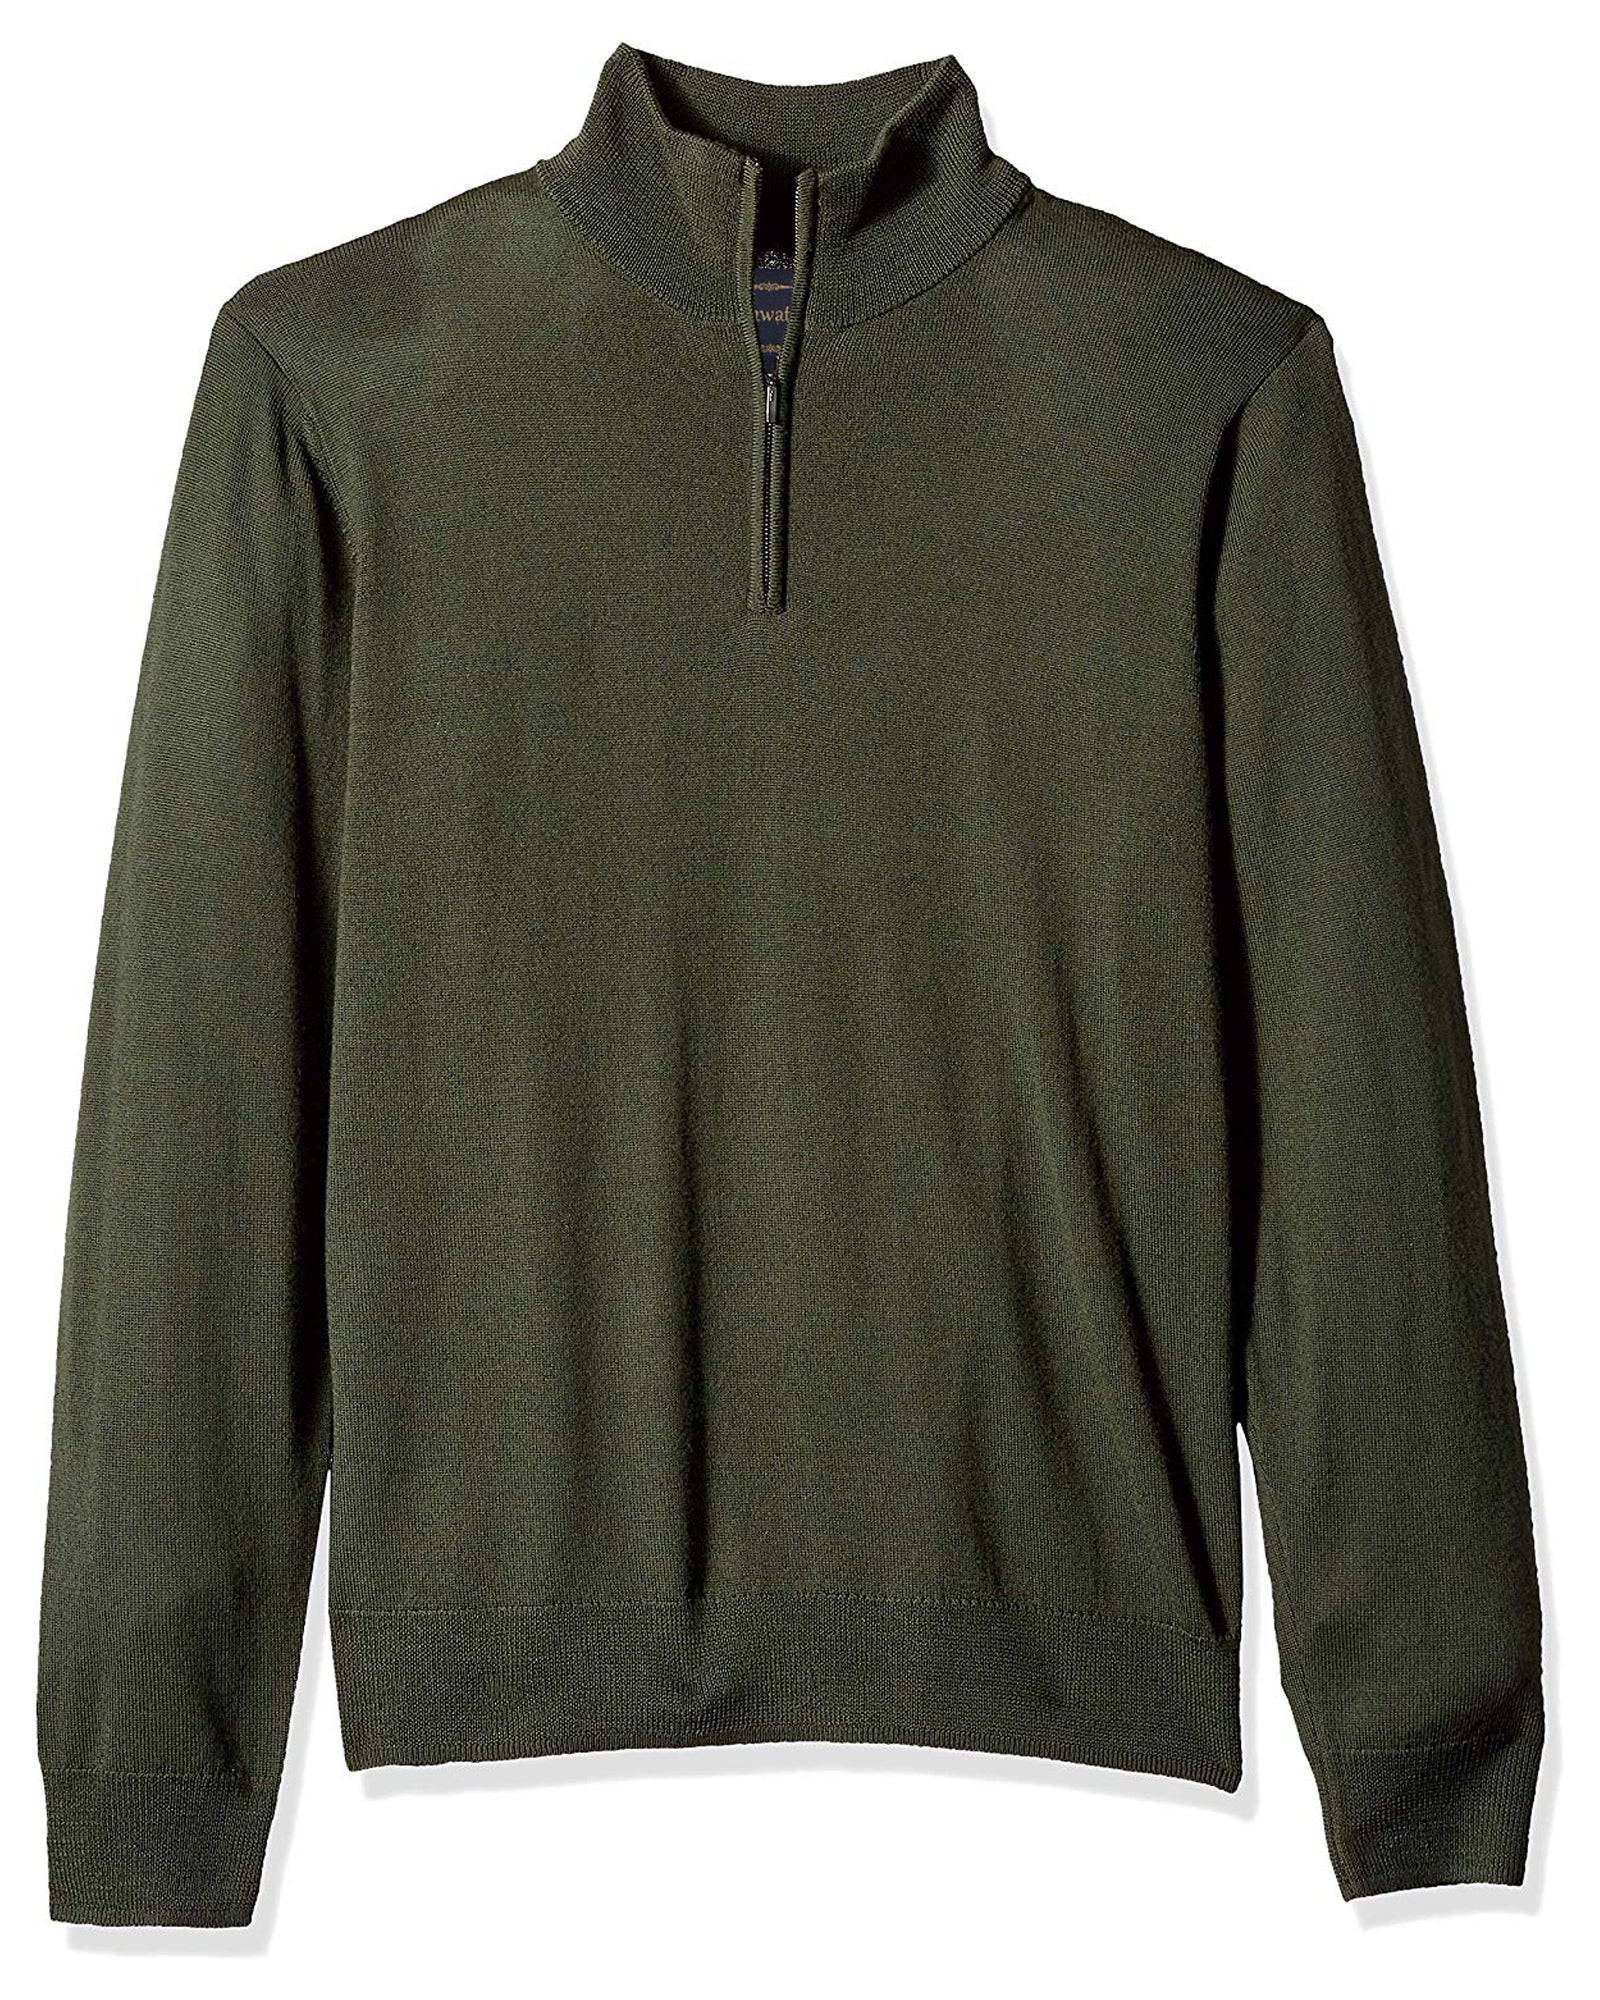 1/4 Zip Mock Sweater in Olive 100% Merino Wool - Rainwater's Men's Clothing and Tuxedo Rental